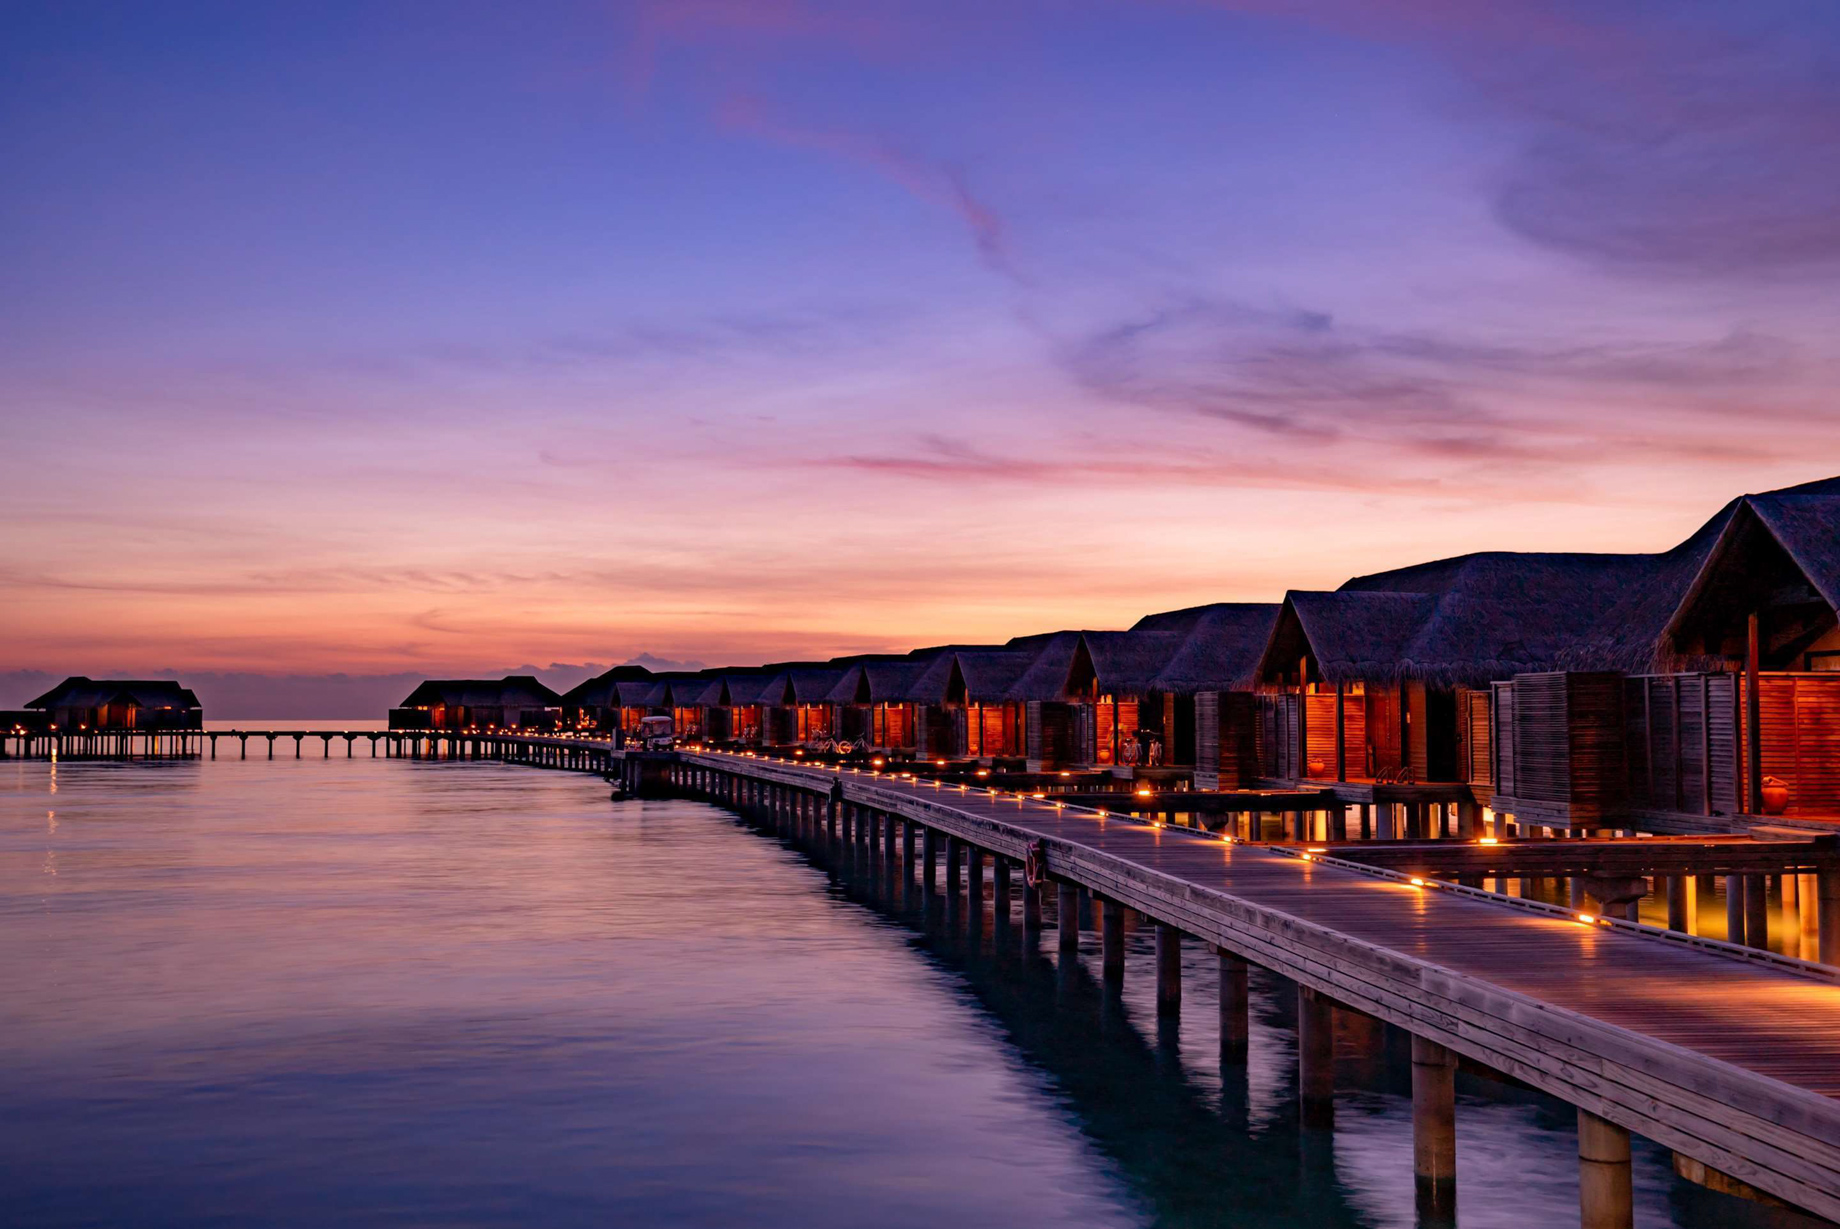 Anantara Kihavah Maldives Villas Resort – Baa Atoll, Maldives – Overwater Villas Sunset View